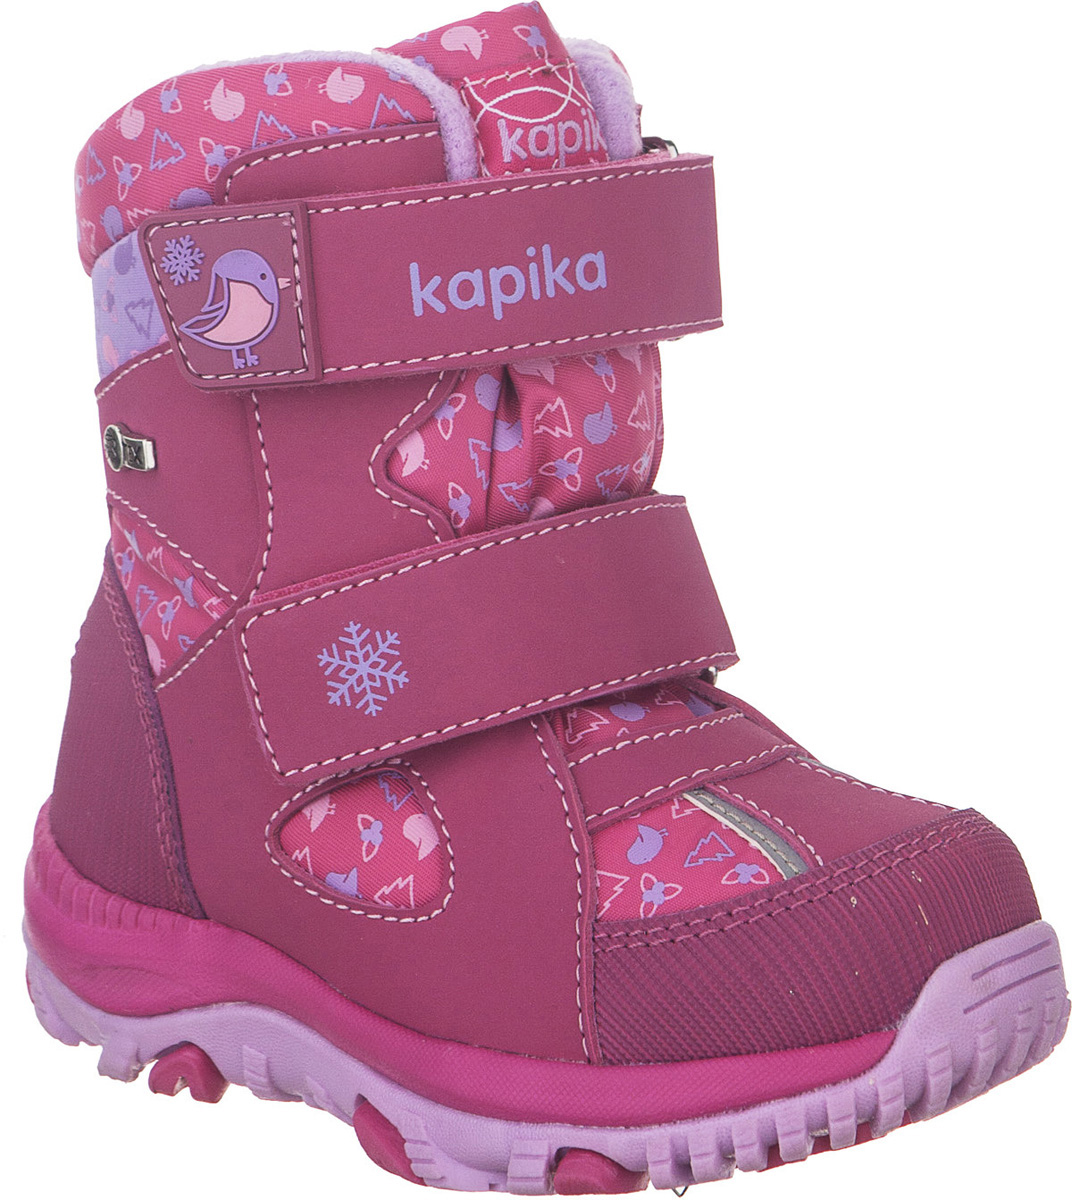 Ботинки для девочки Kapika KapiTEX, цвет: фуксия. 41223-2. Размер 24